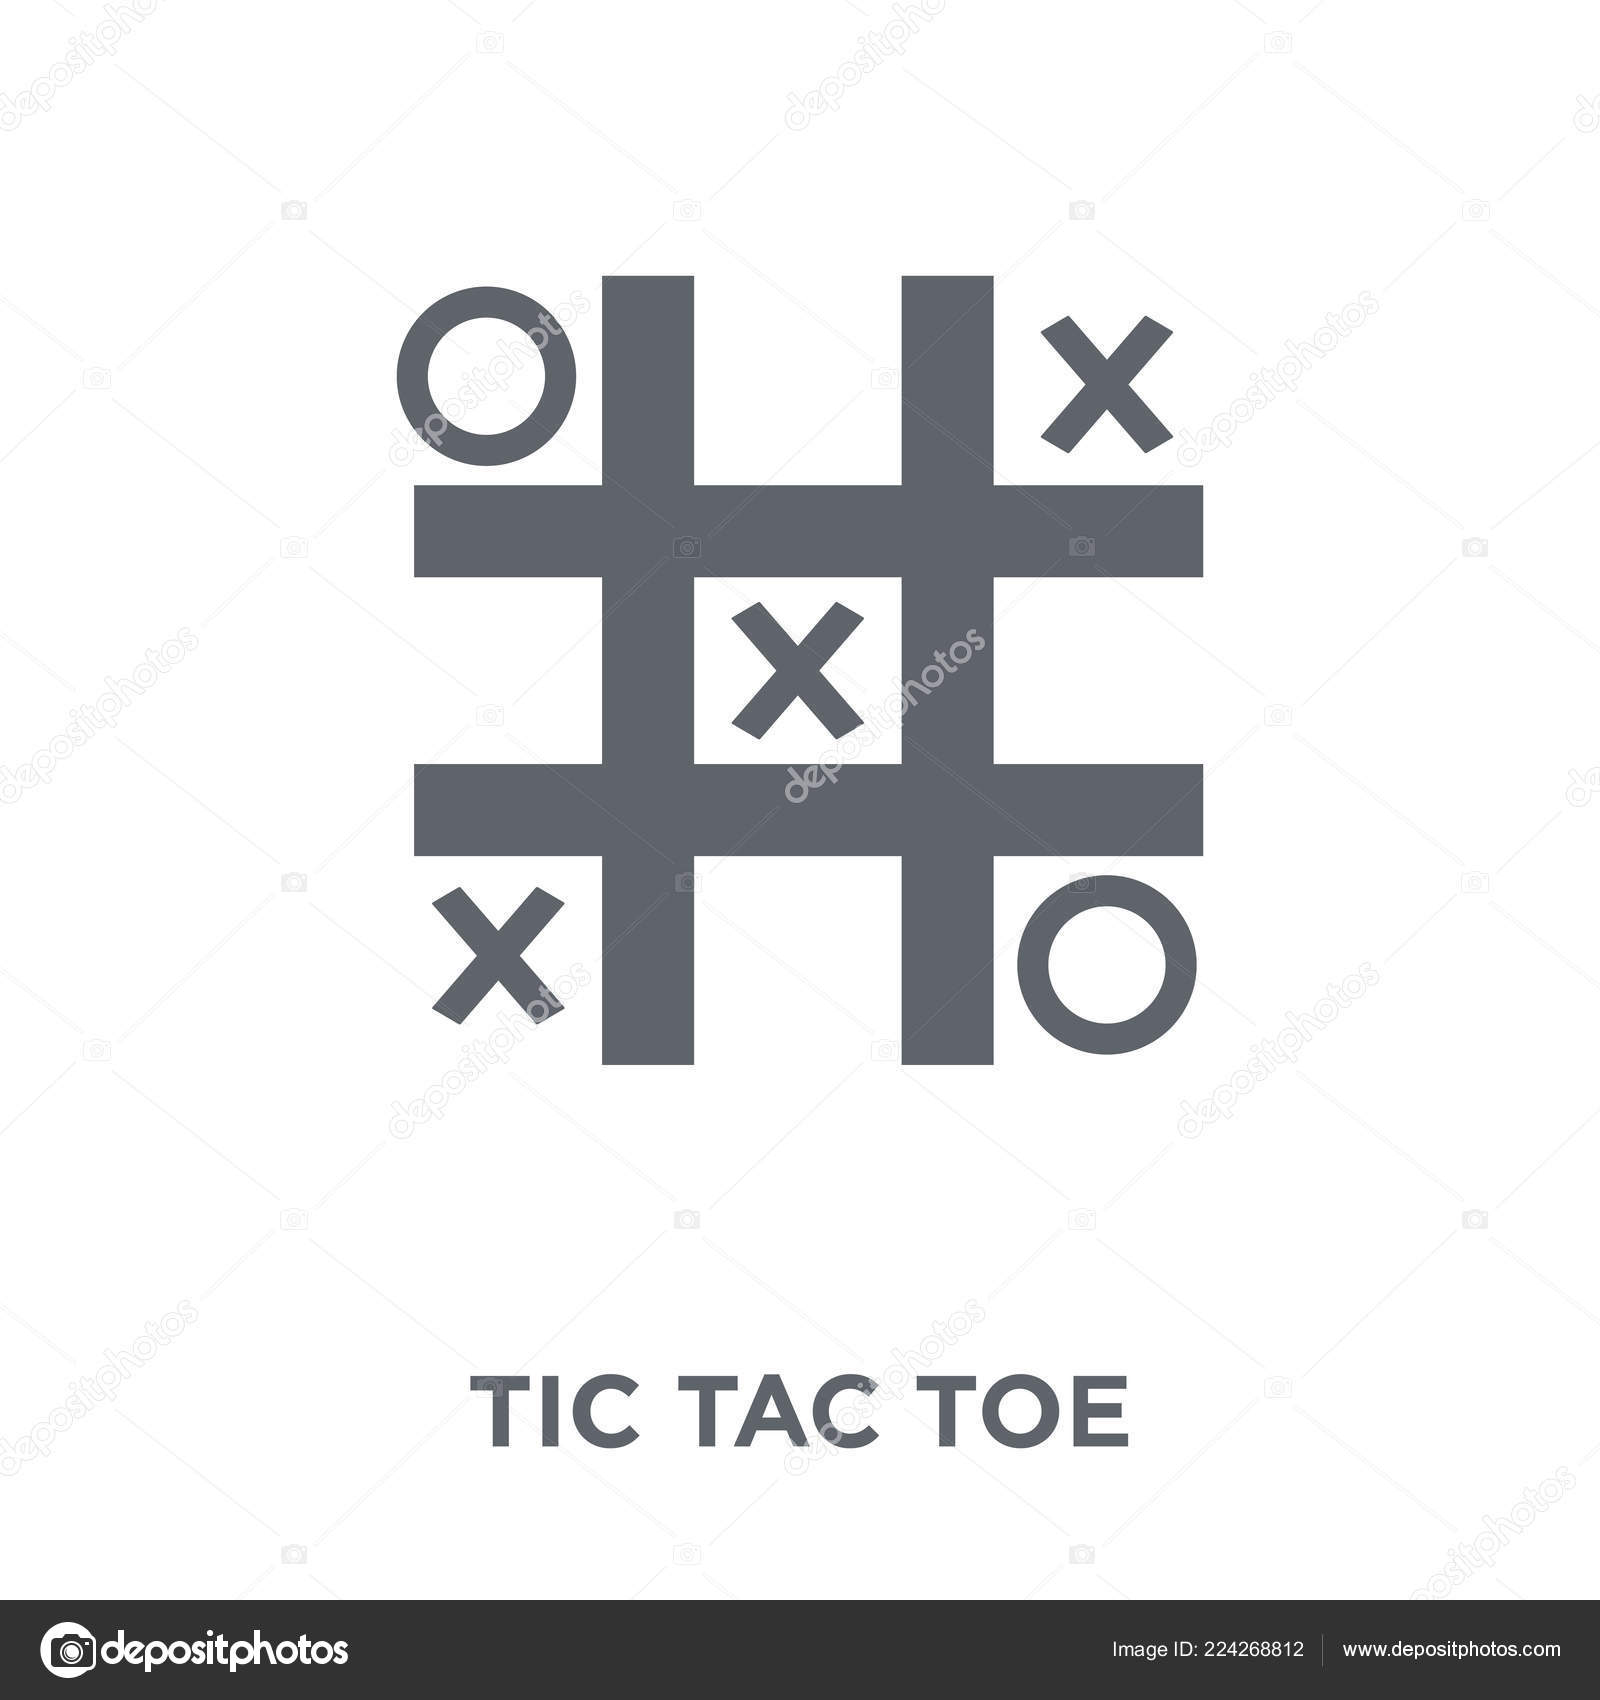 Strategic Tic-Tac-Toe - 🕹️ Online Game